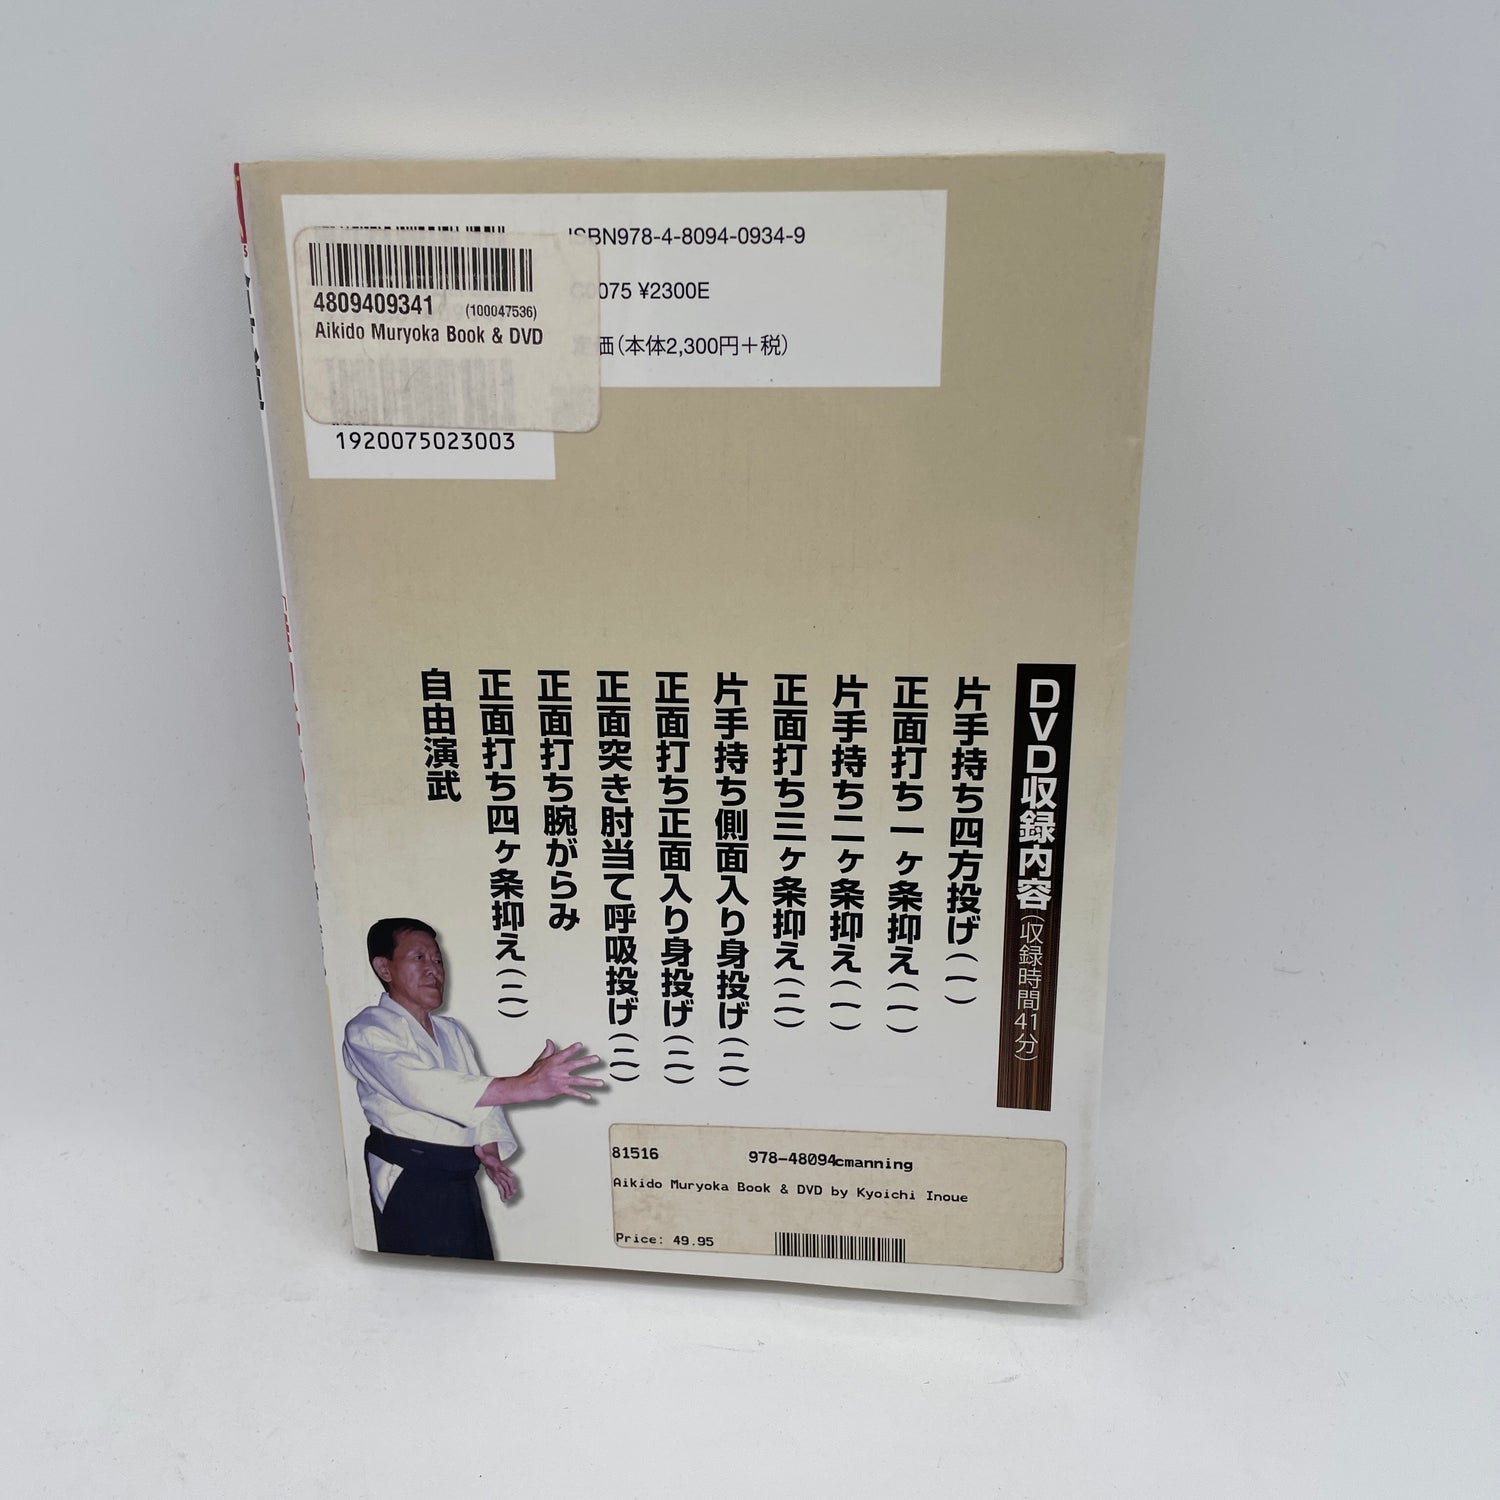 Aikido Muryoka Book & DVD by Kyoichi Inoue